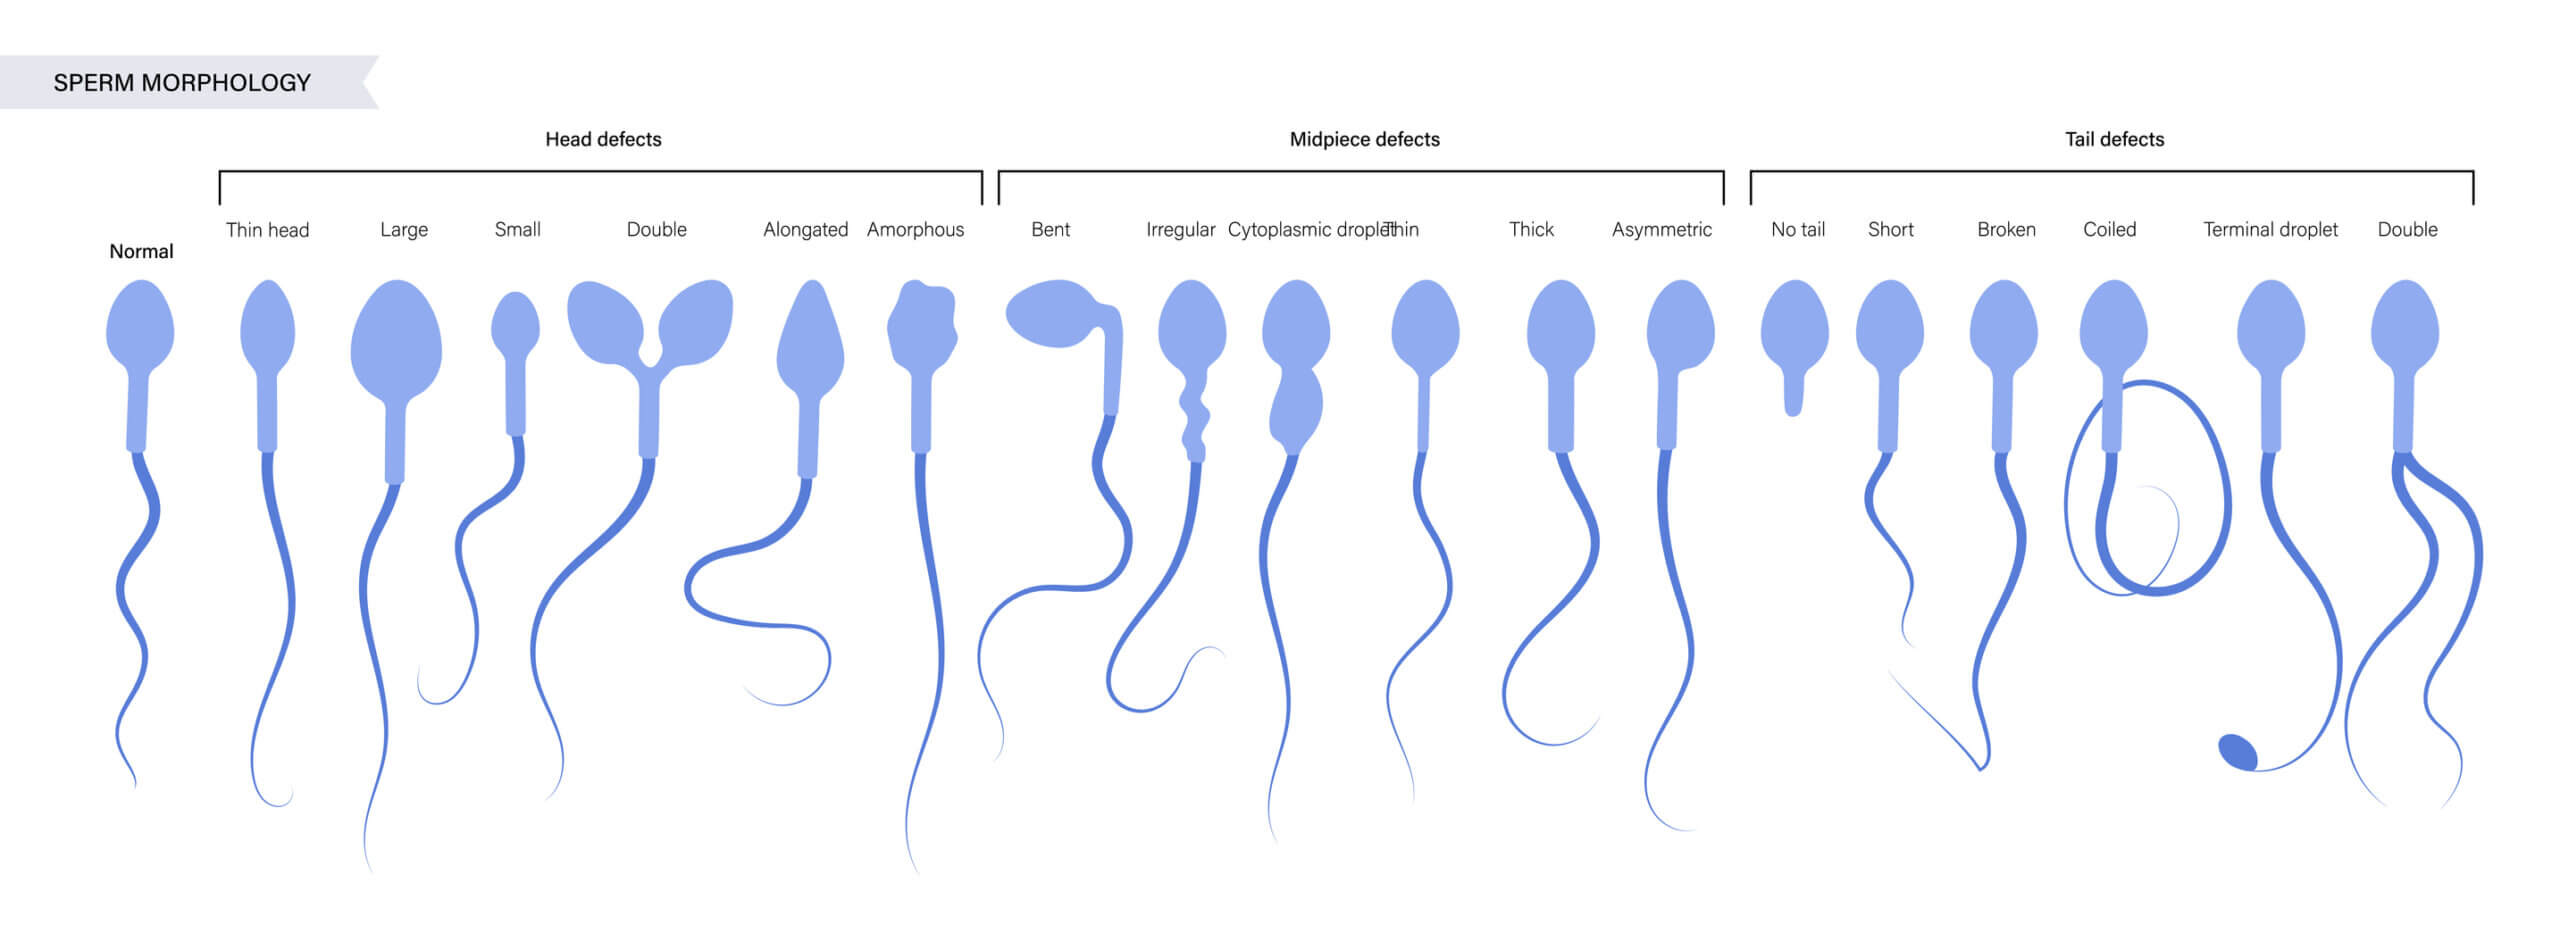 Sperm morphology defects